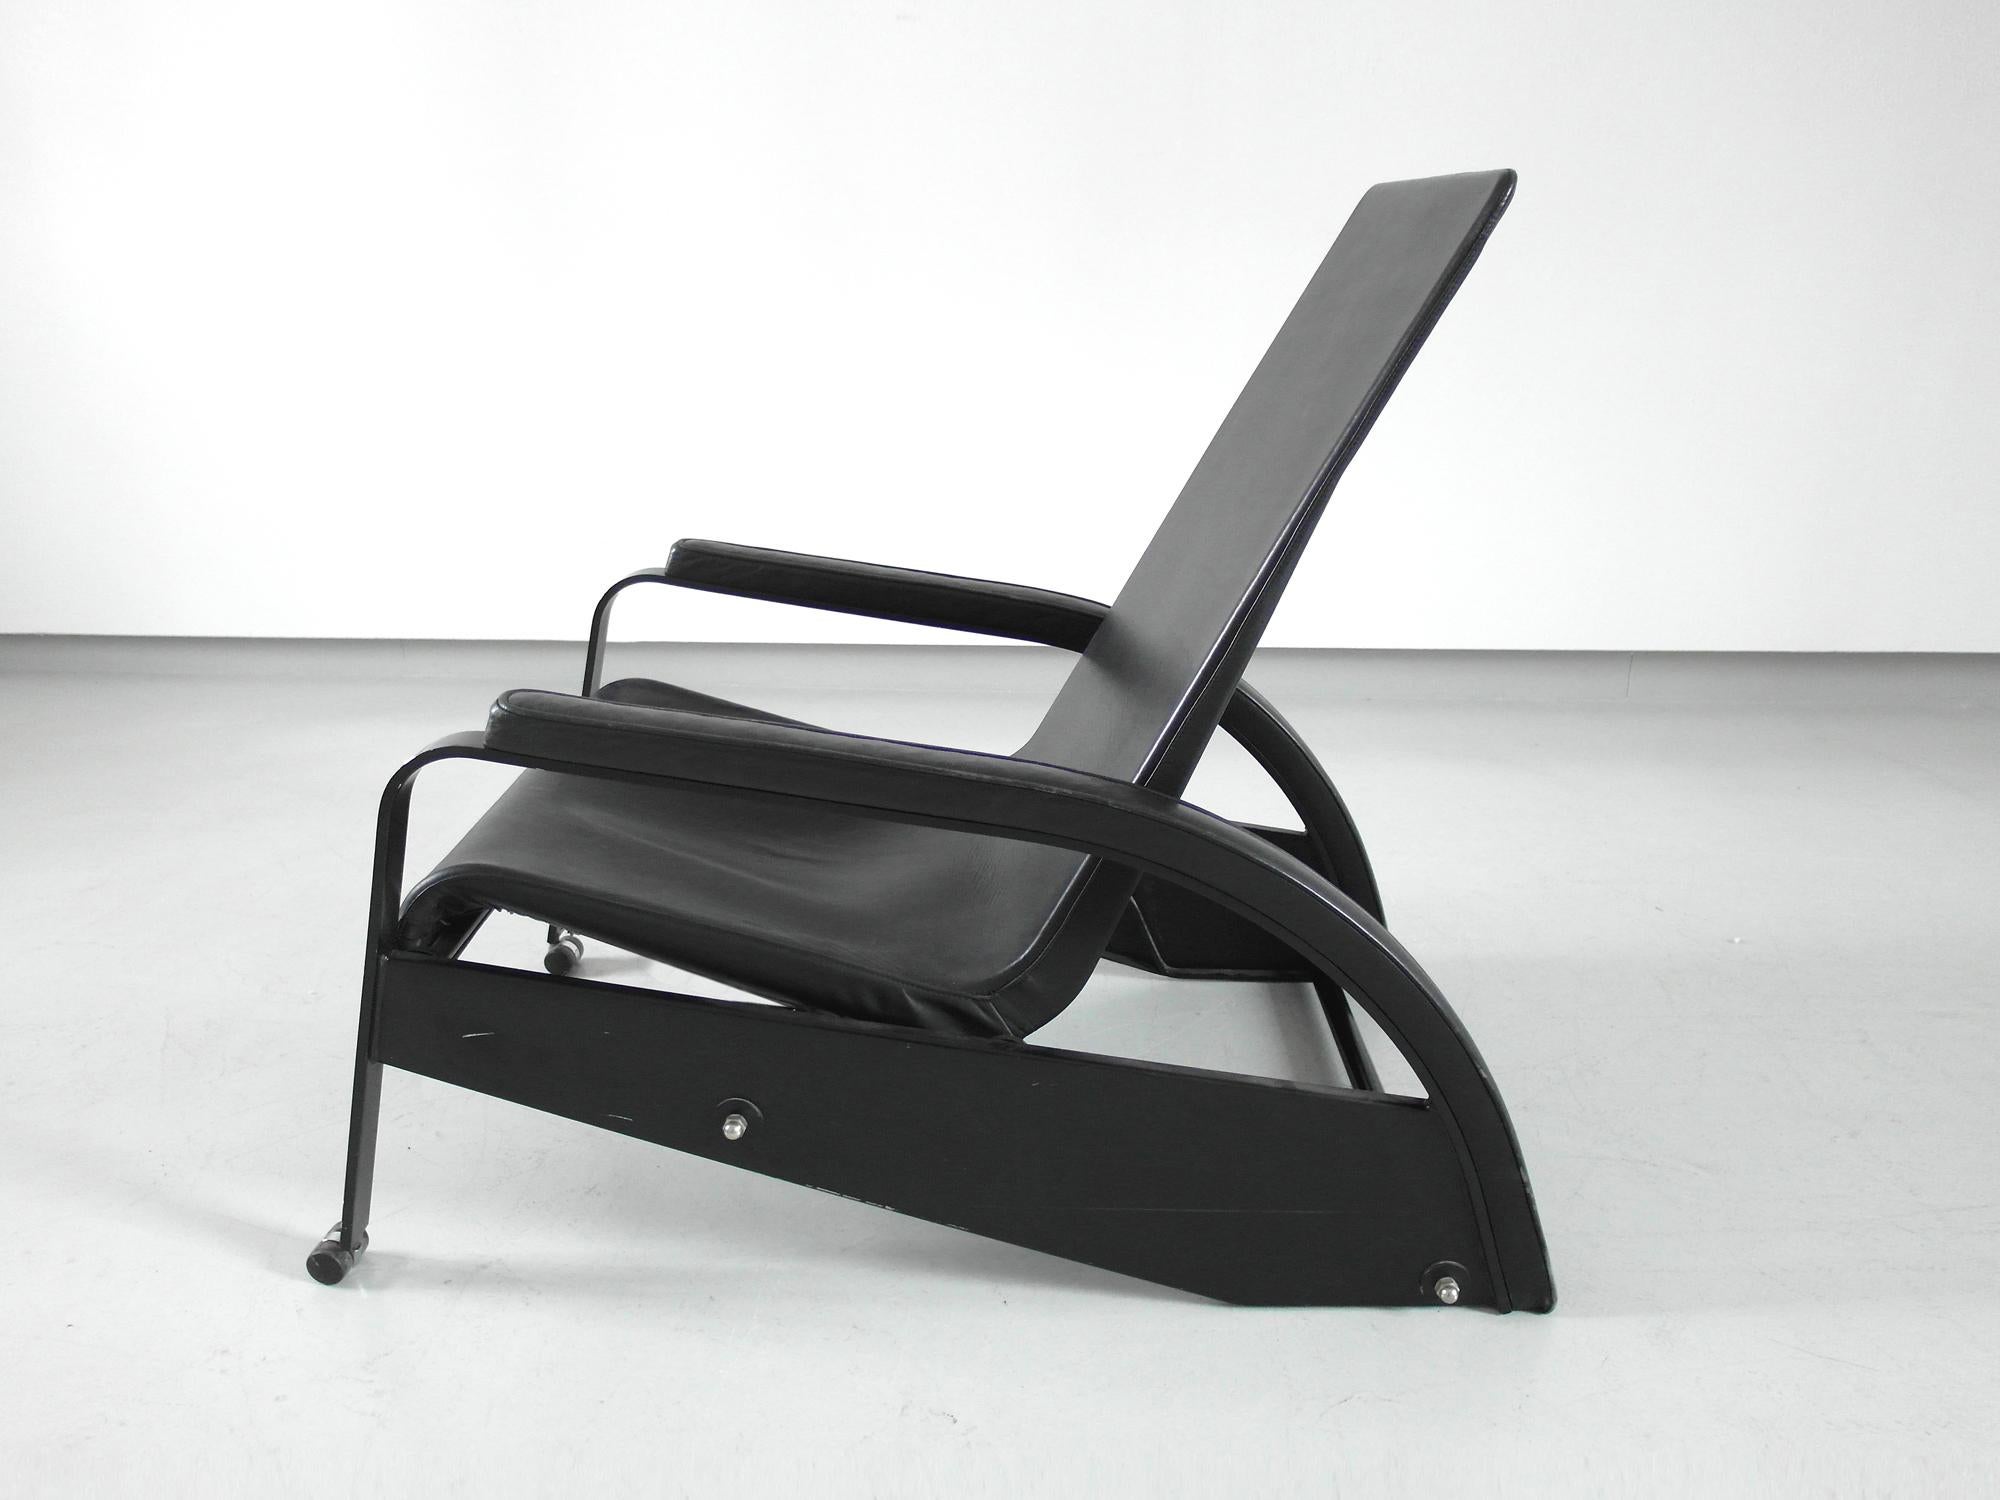 20th Century Jean Prouvé Grand Repos chair, Design 1928-1930, Production Tecta, 1980-1984